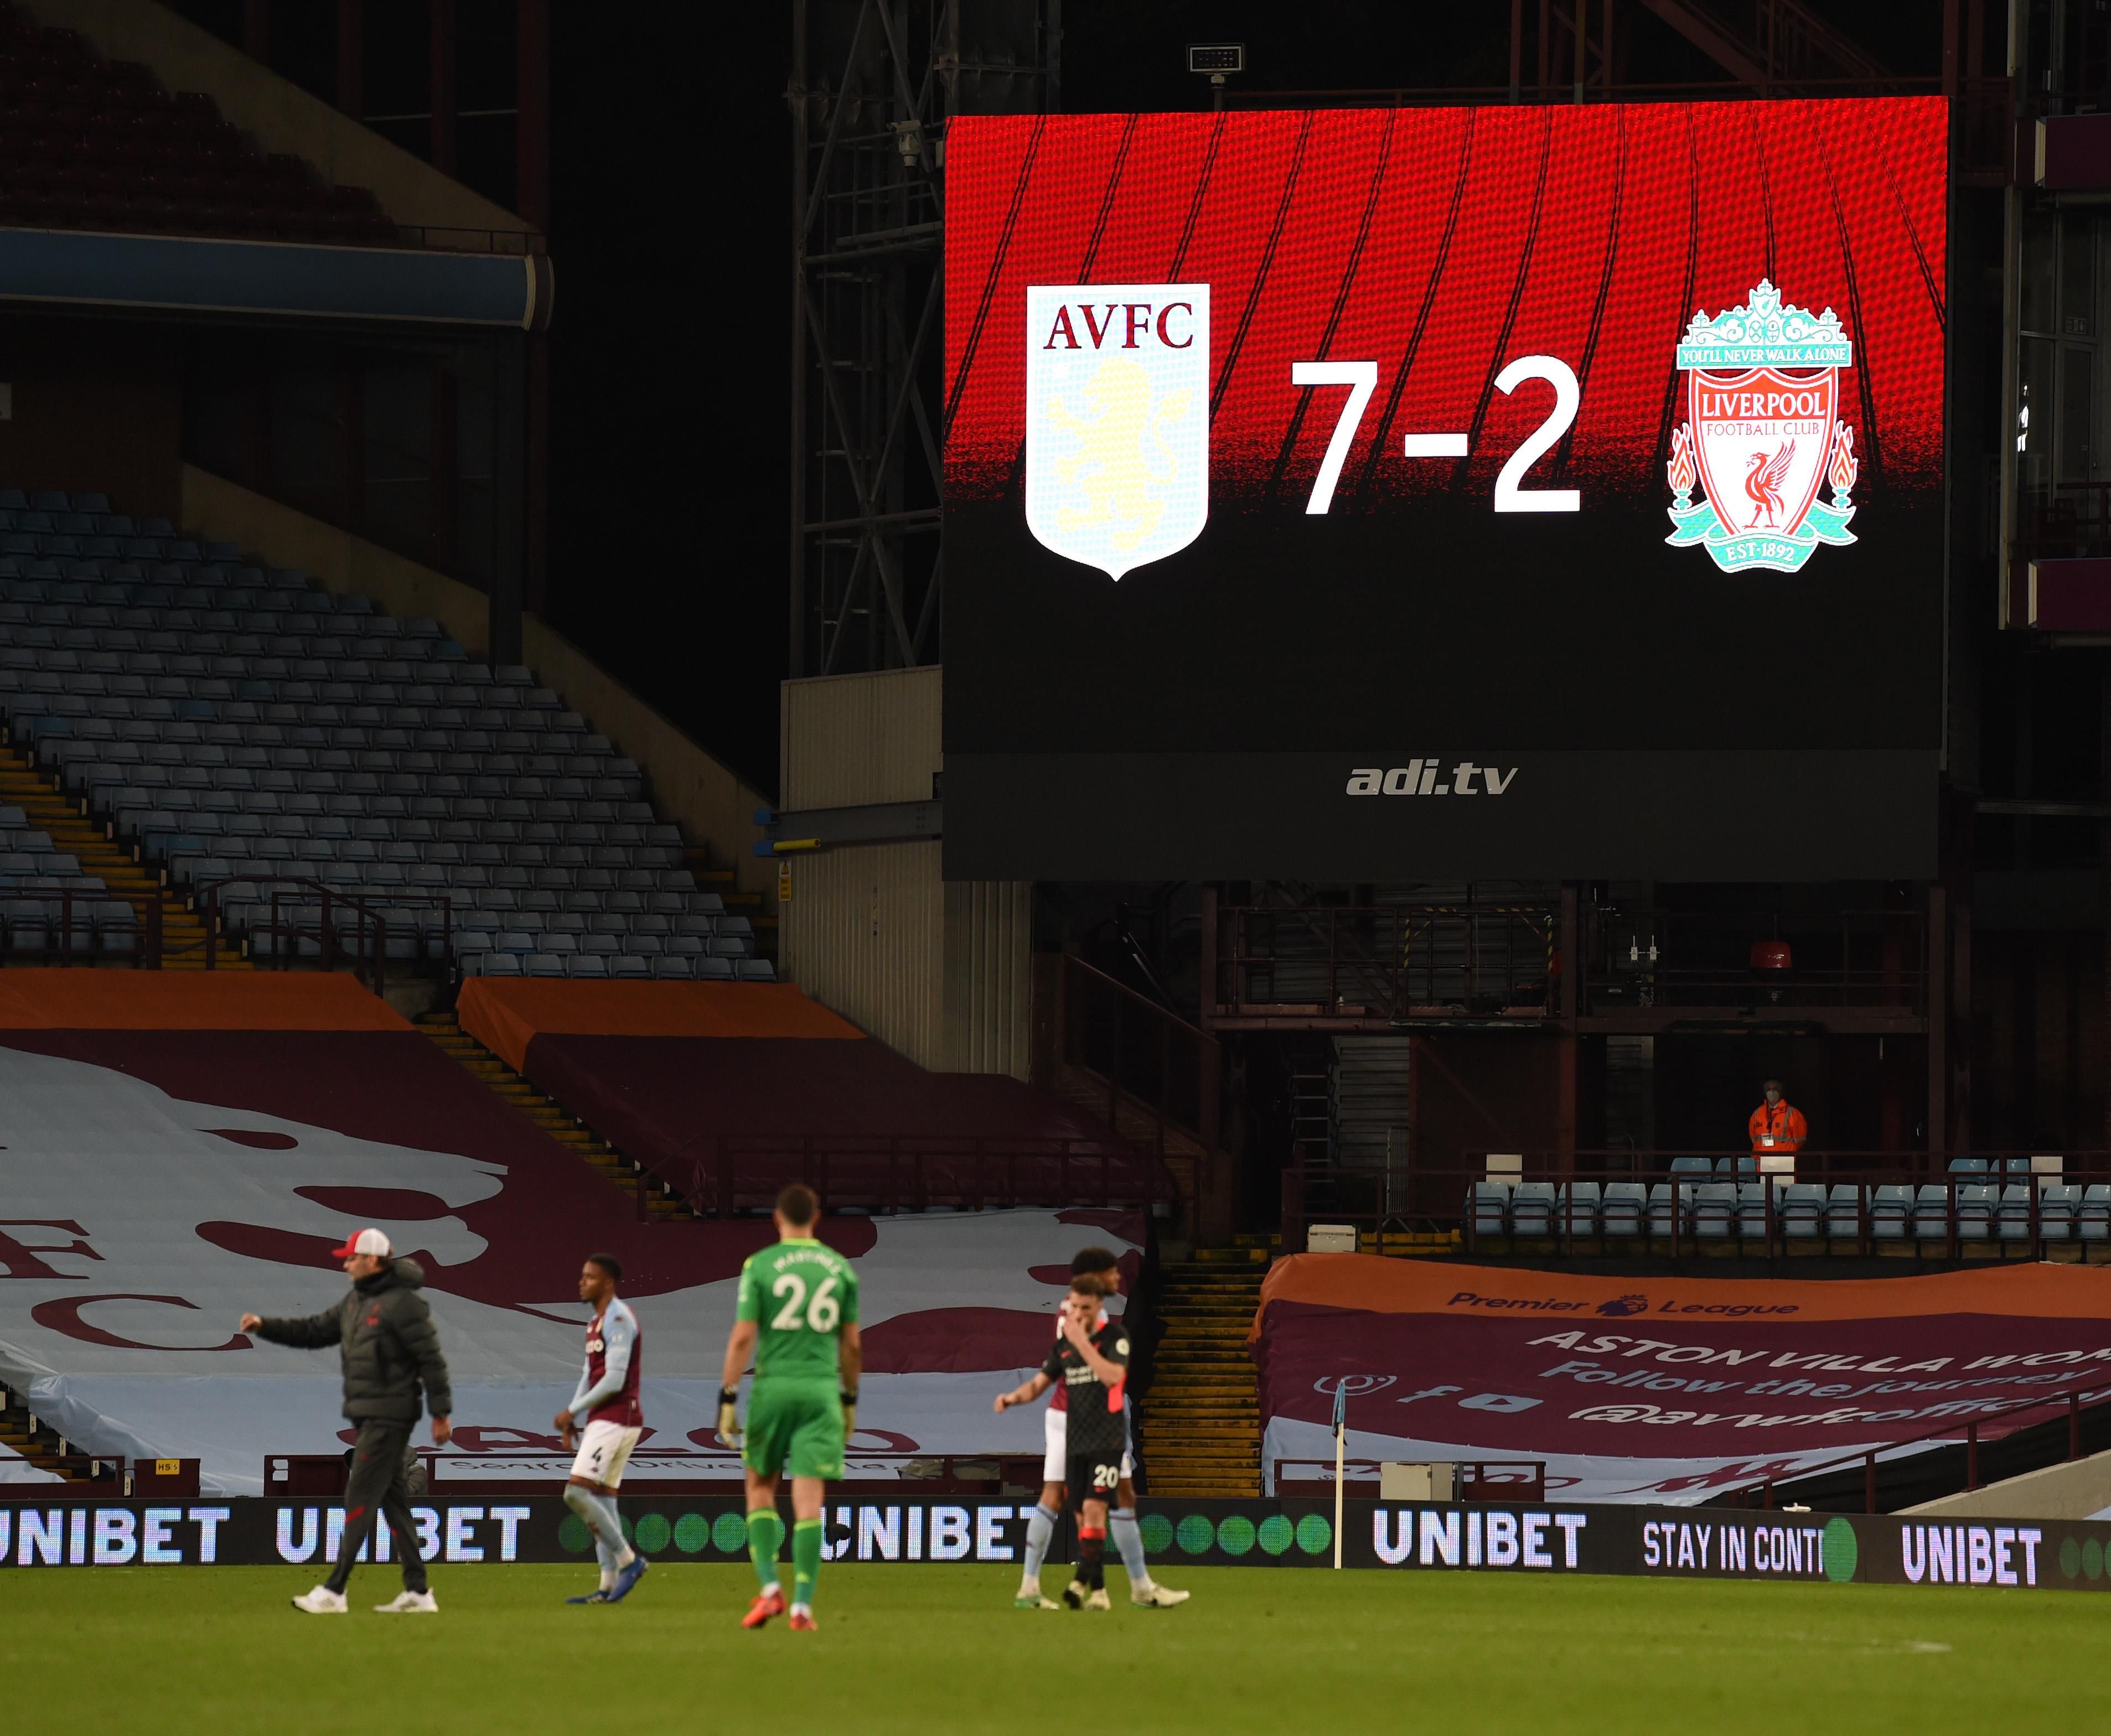 Aston Villa 7-2 Liverpool./twitter.com./@PremierLeague